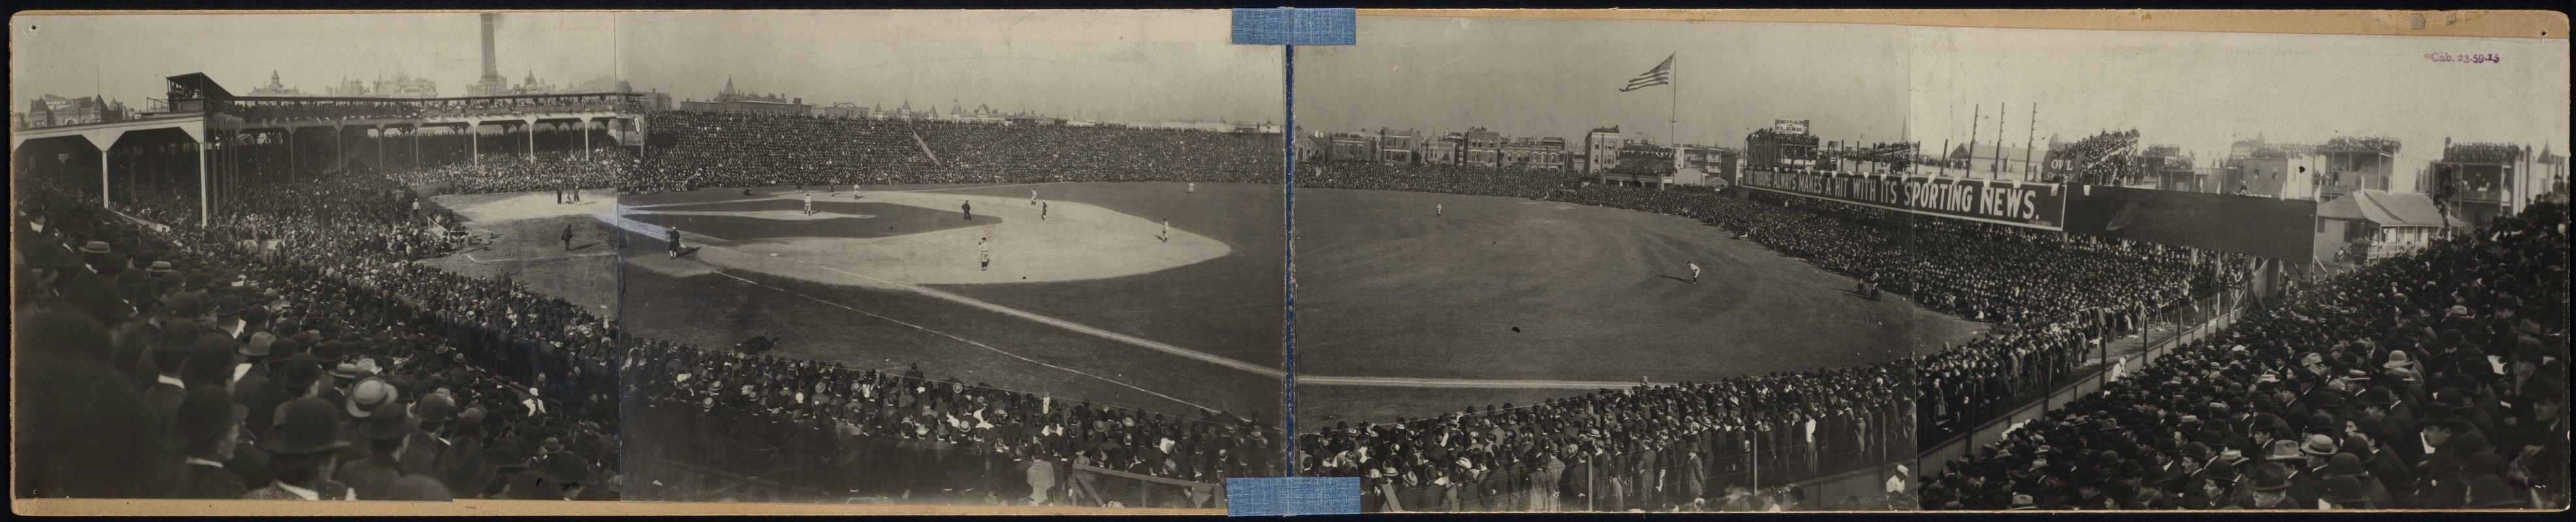 1906 World Series